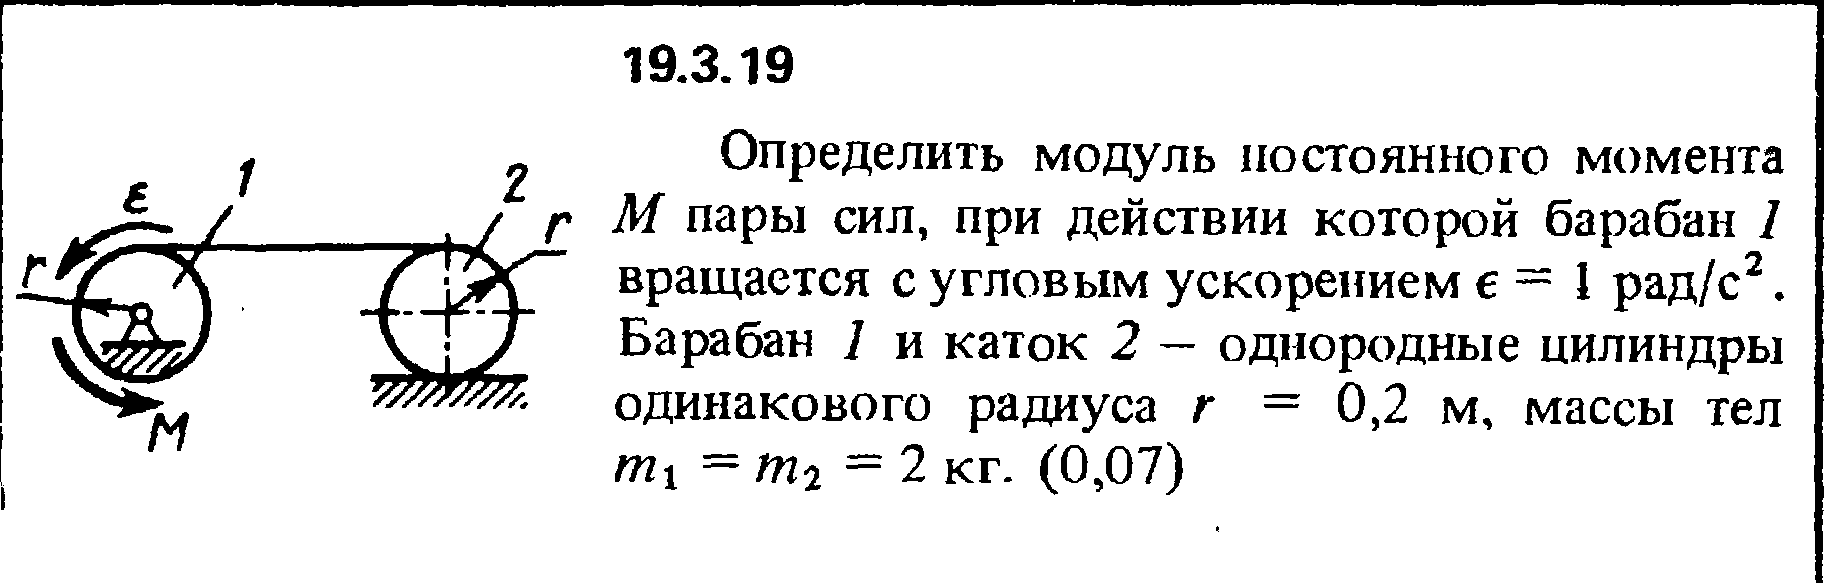 Решение 19.3.19 из сборника (решебника) Кепе О.Е. 1989